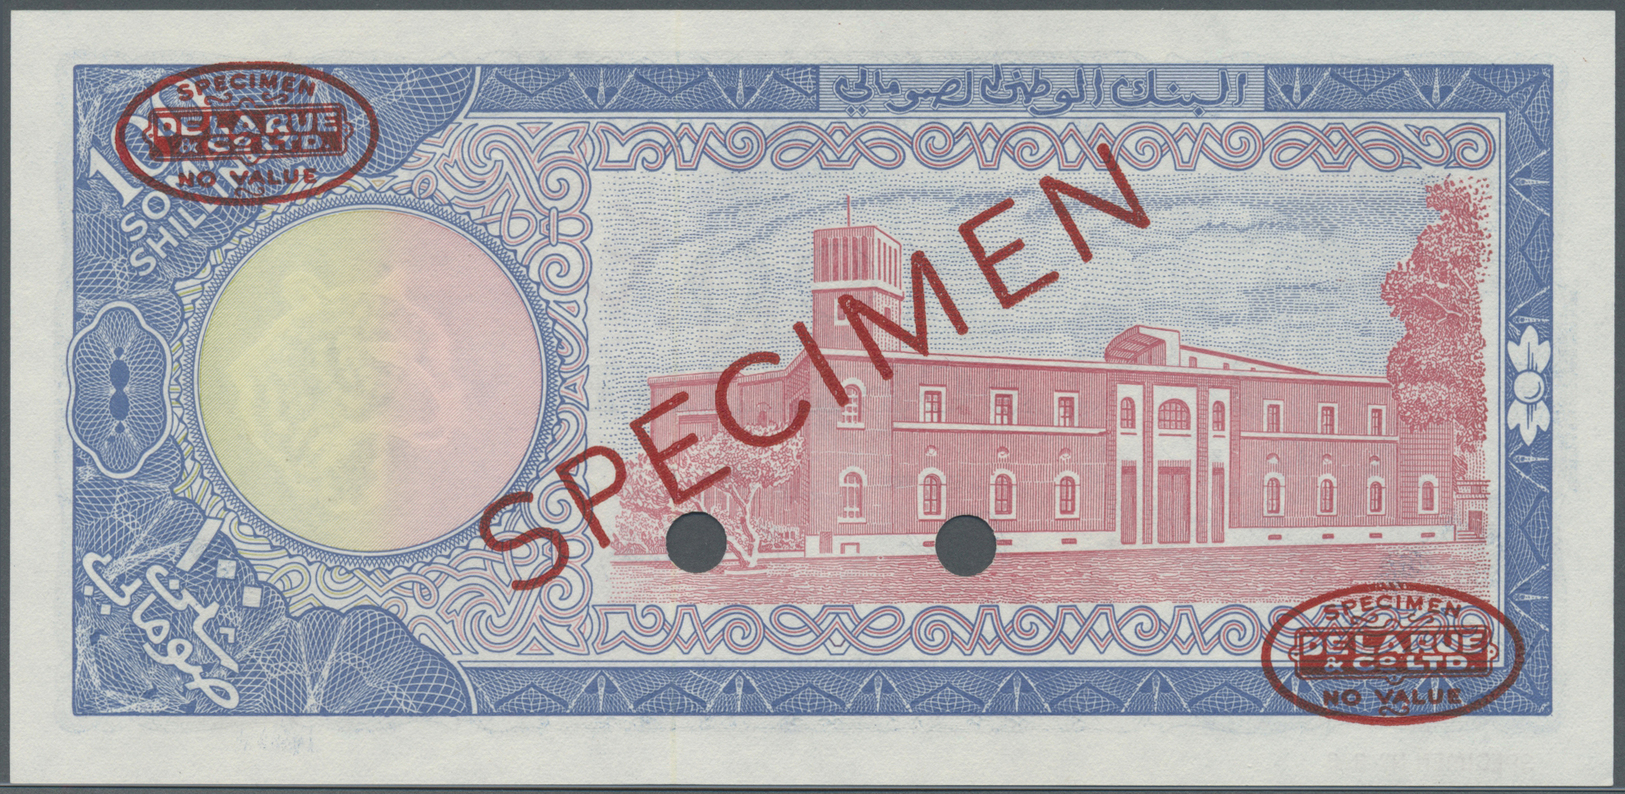 02925 Somalia: 100 Shillings 1966 Specimen P. 9as In Condition: UNC. - Somalie